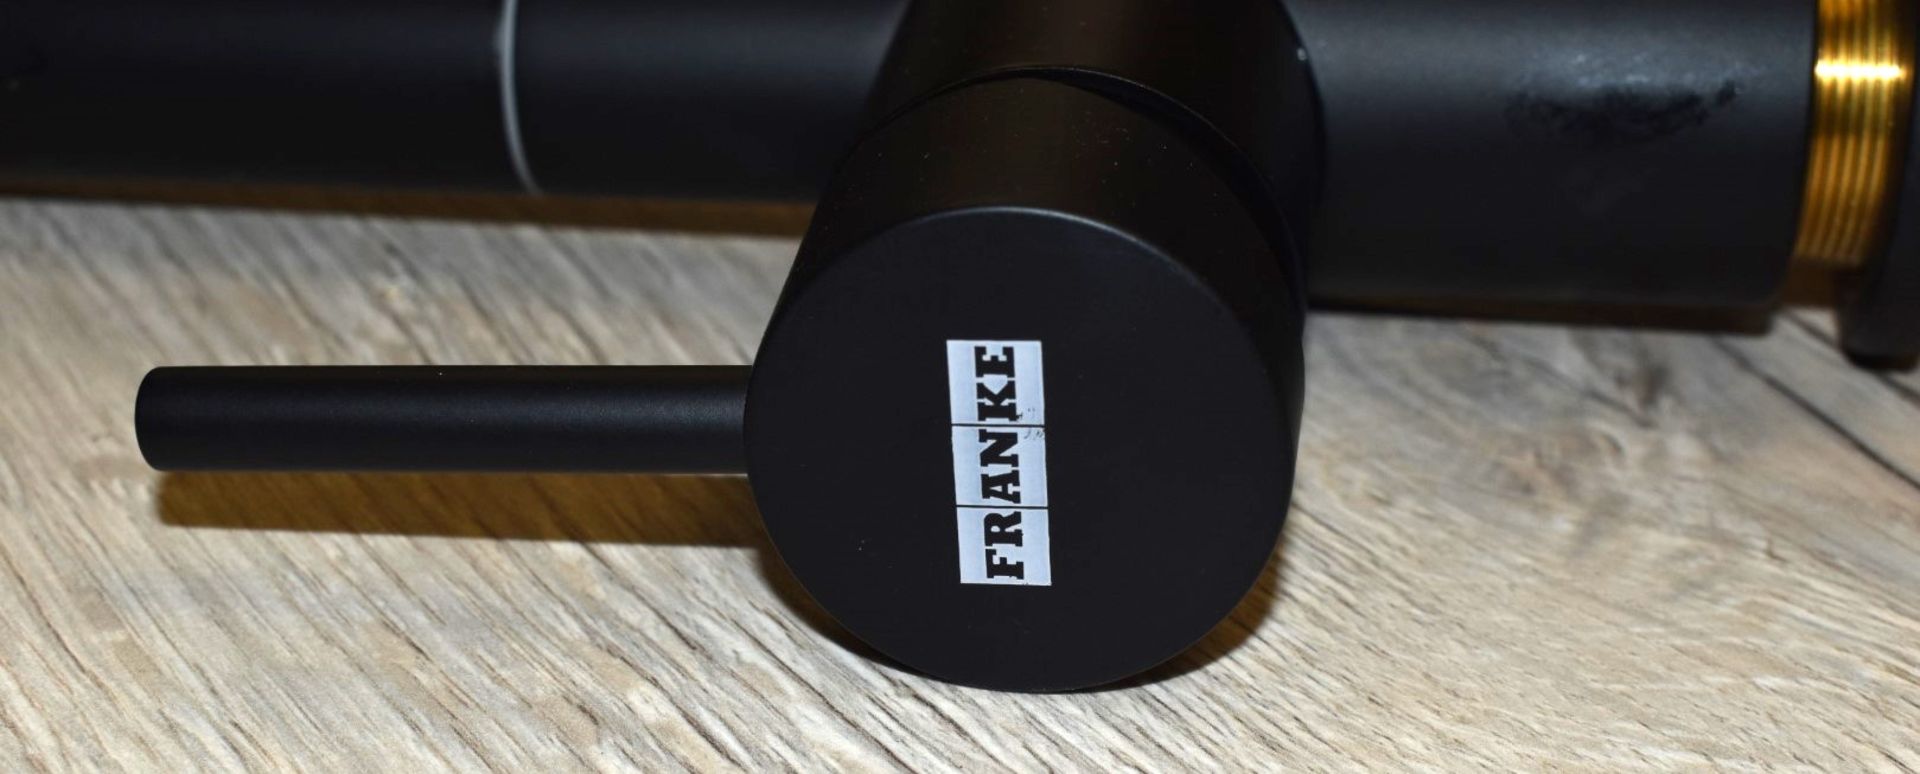 1 x Franke Premium Single Lever Kitchen Mixer Tap in Black - Image 6 of 8